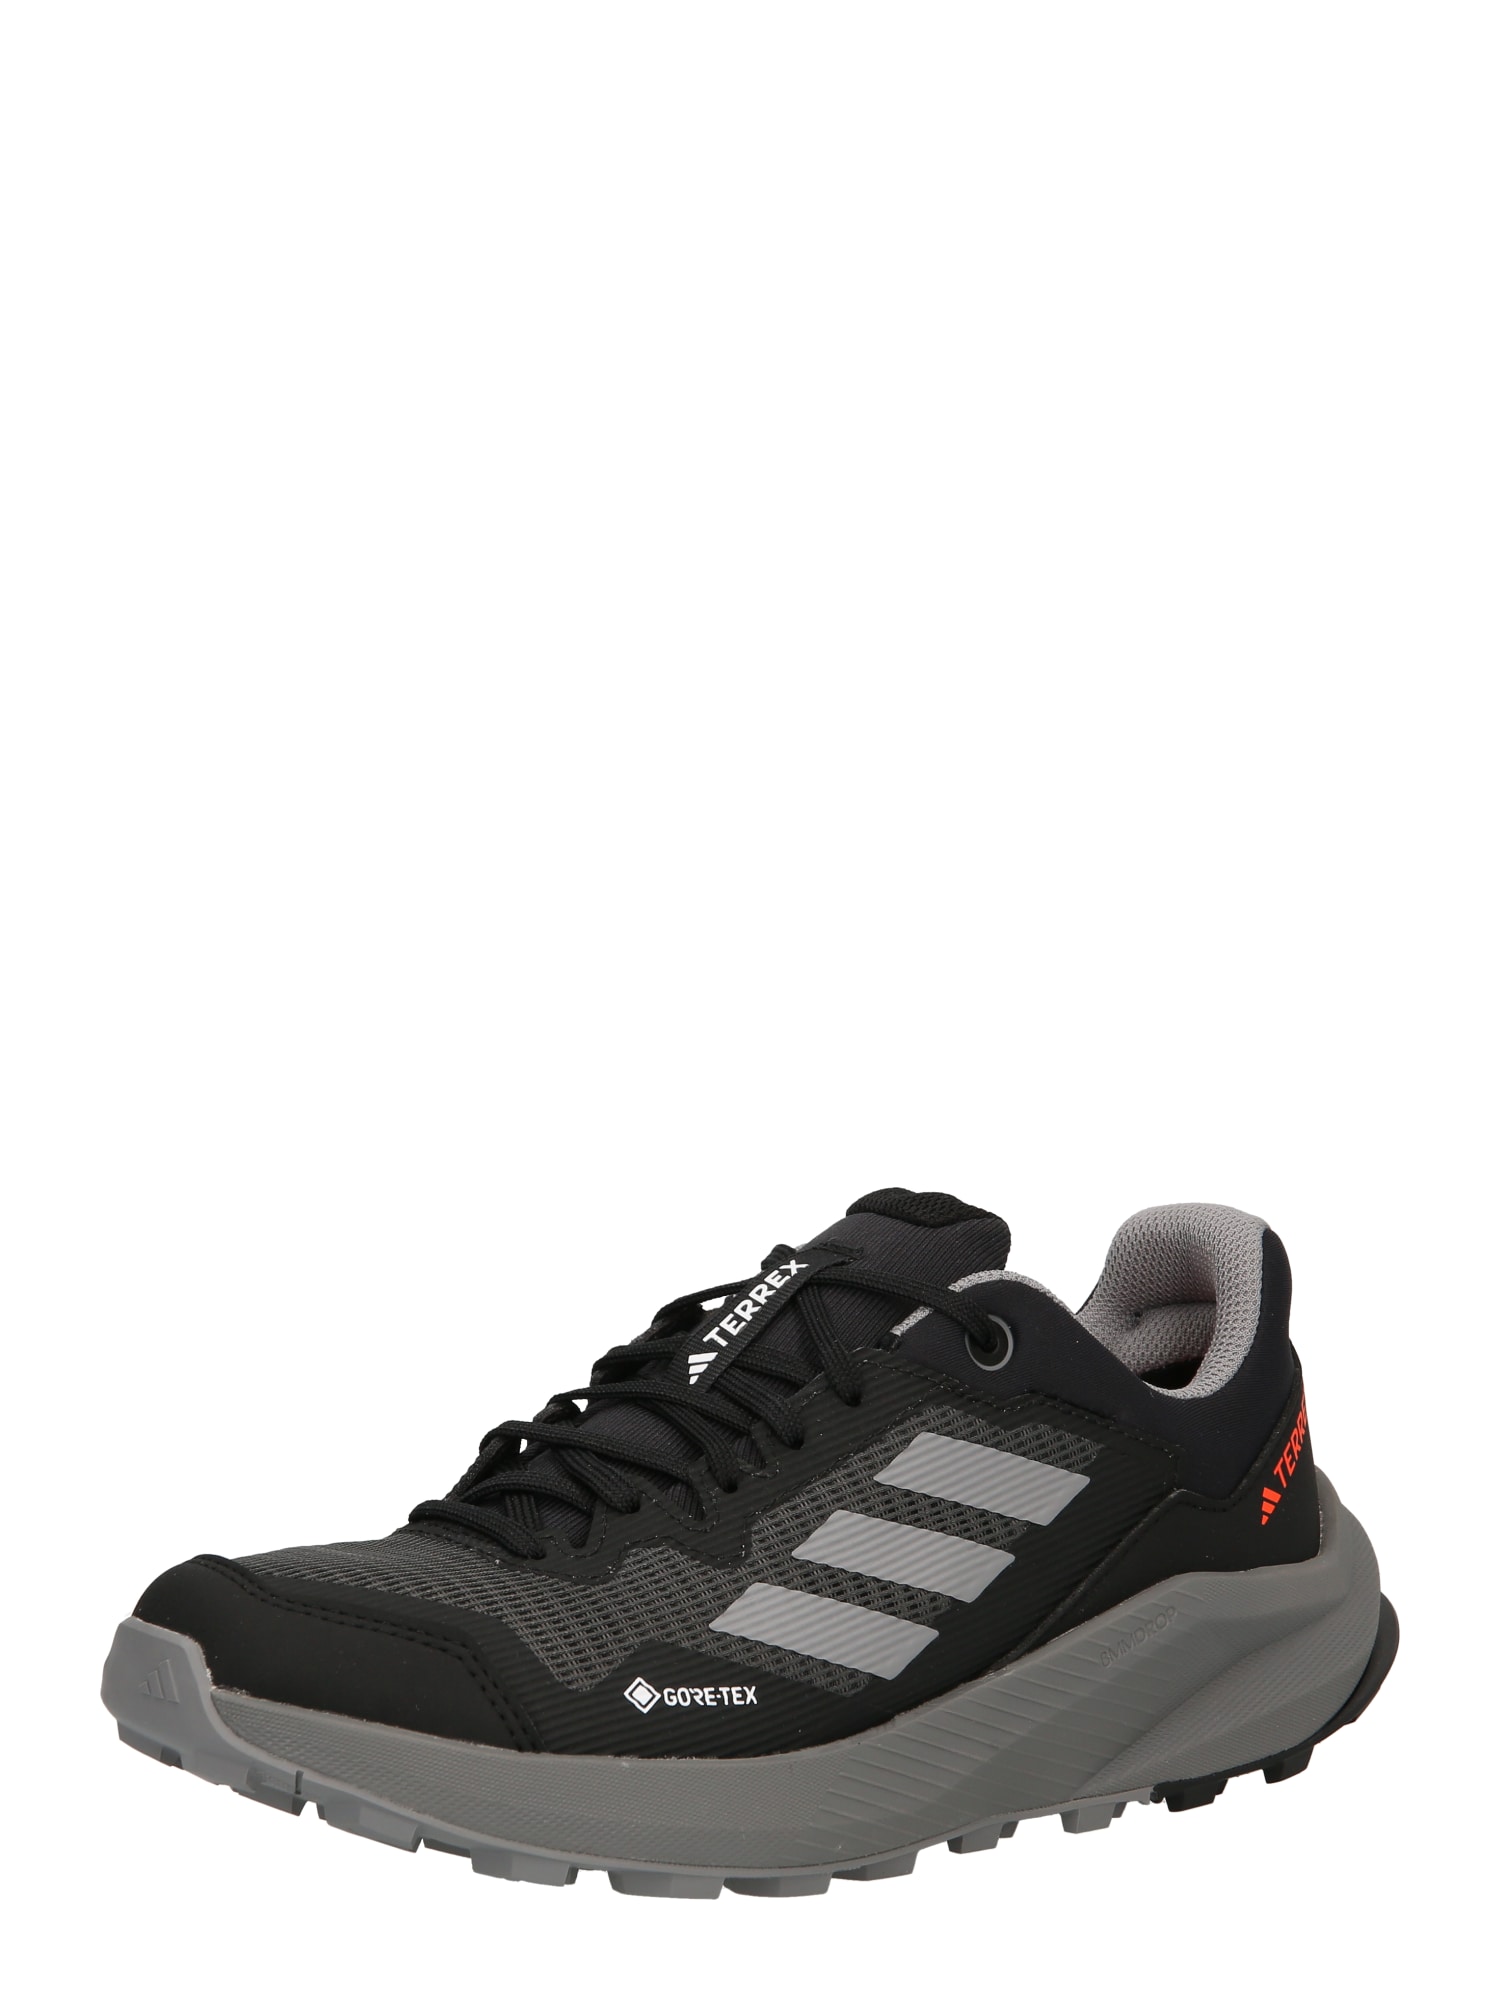 ADIDAS TERREX Bėgimo batai 'Trailrider' pilka / raudona / juoda / balta